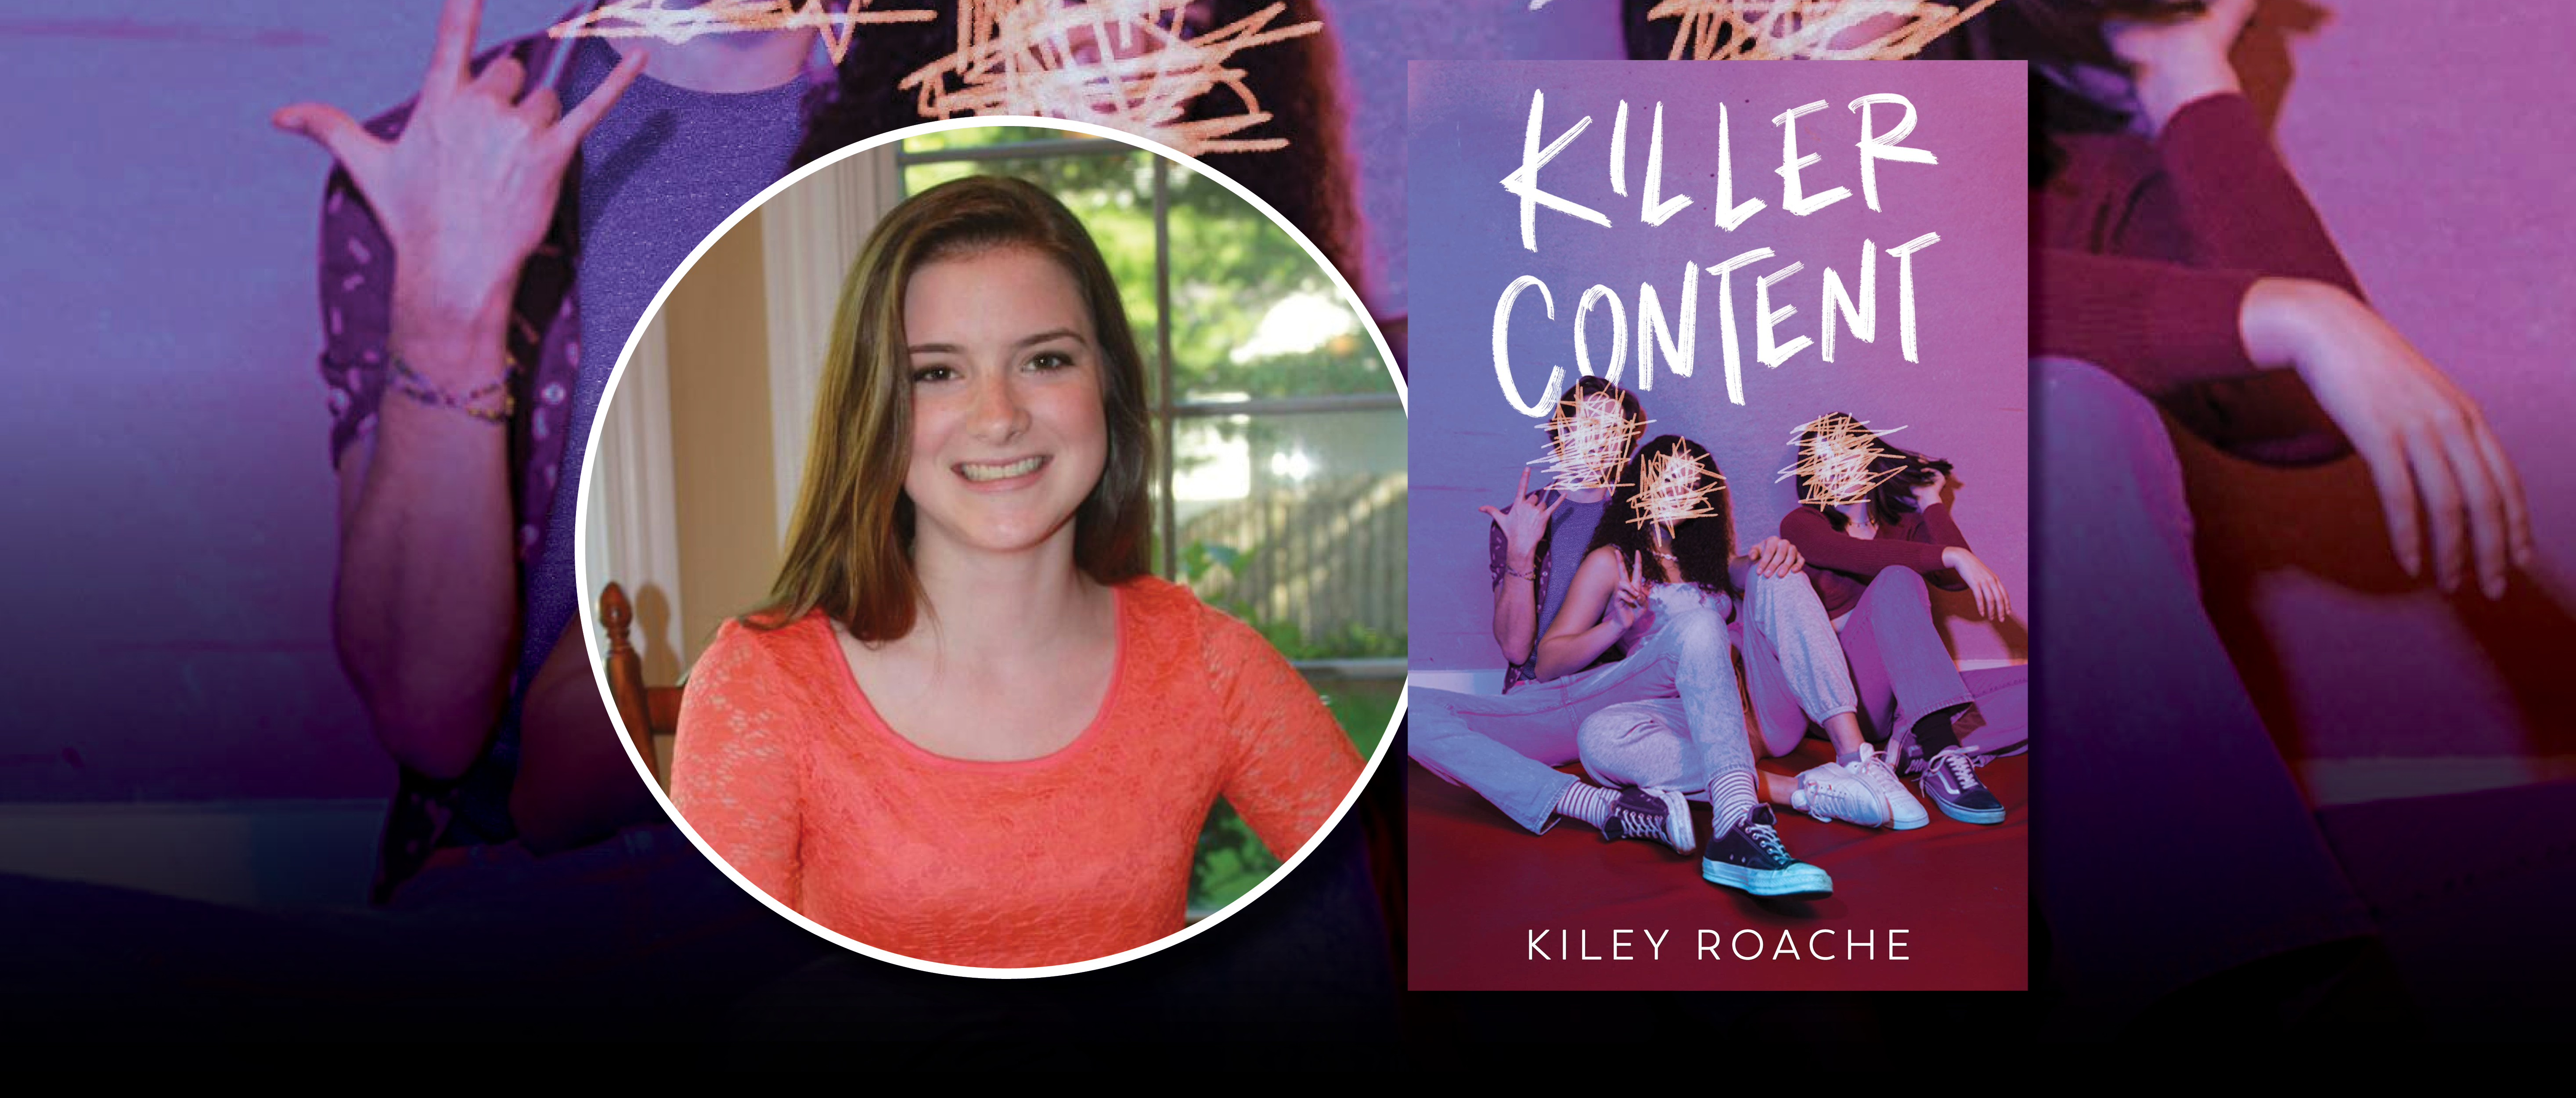 Virtual event with Kiley Roache/Killer Content